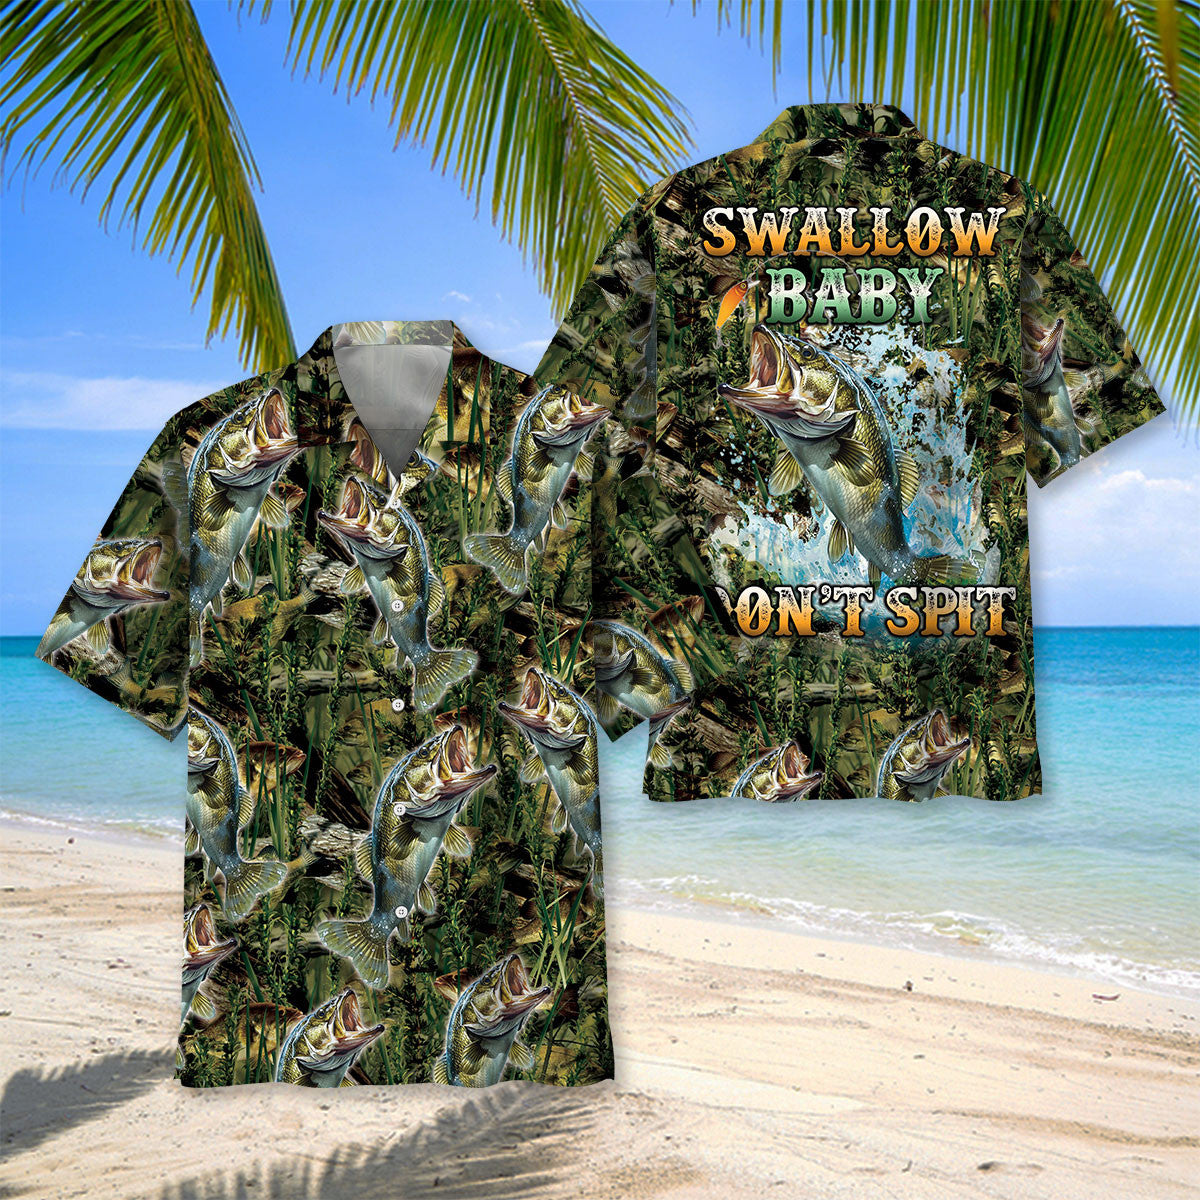 Swallow Baby Don't Spit Hawaiian Shirt